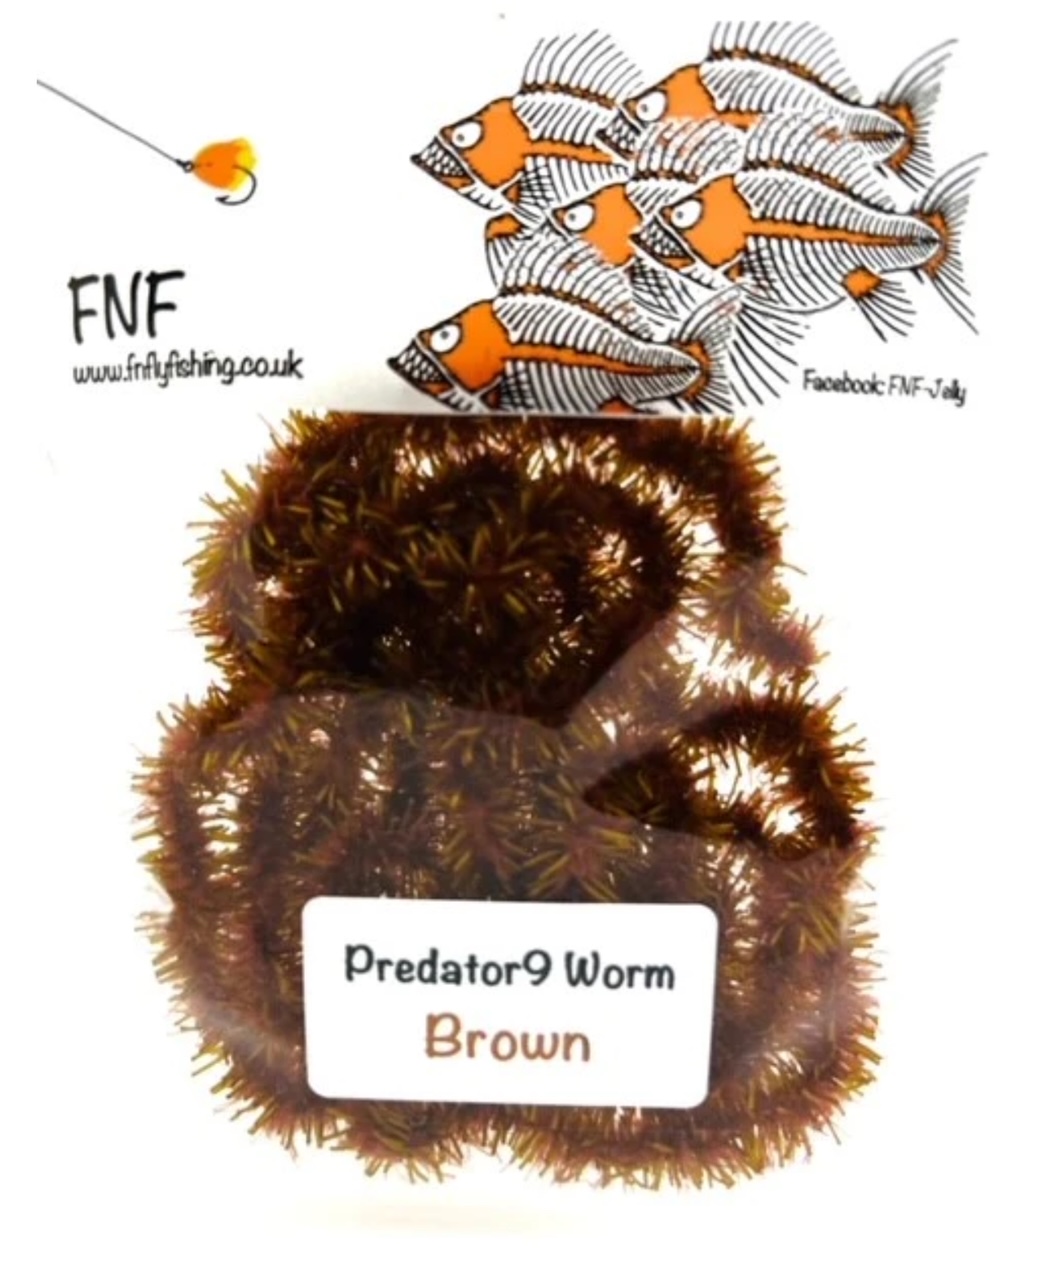 FNF Ltd. Predator9 Worm